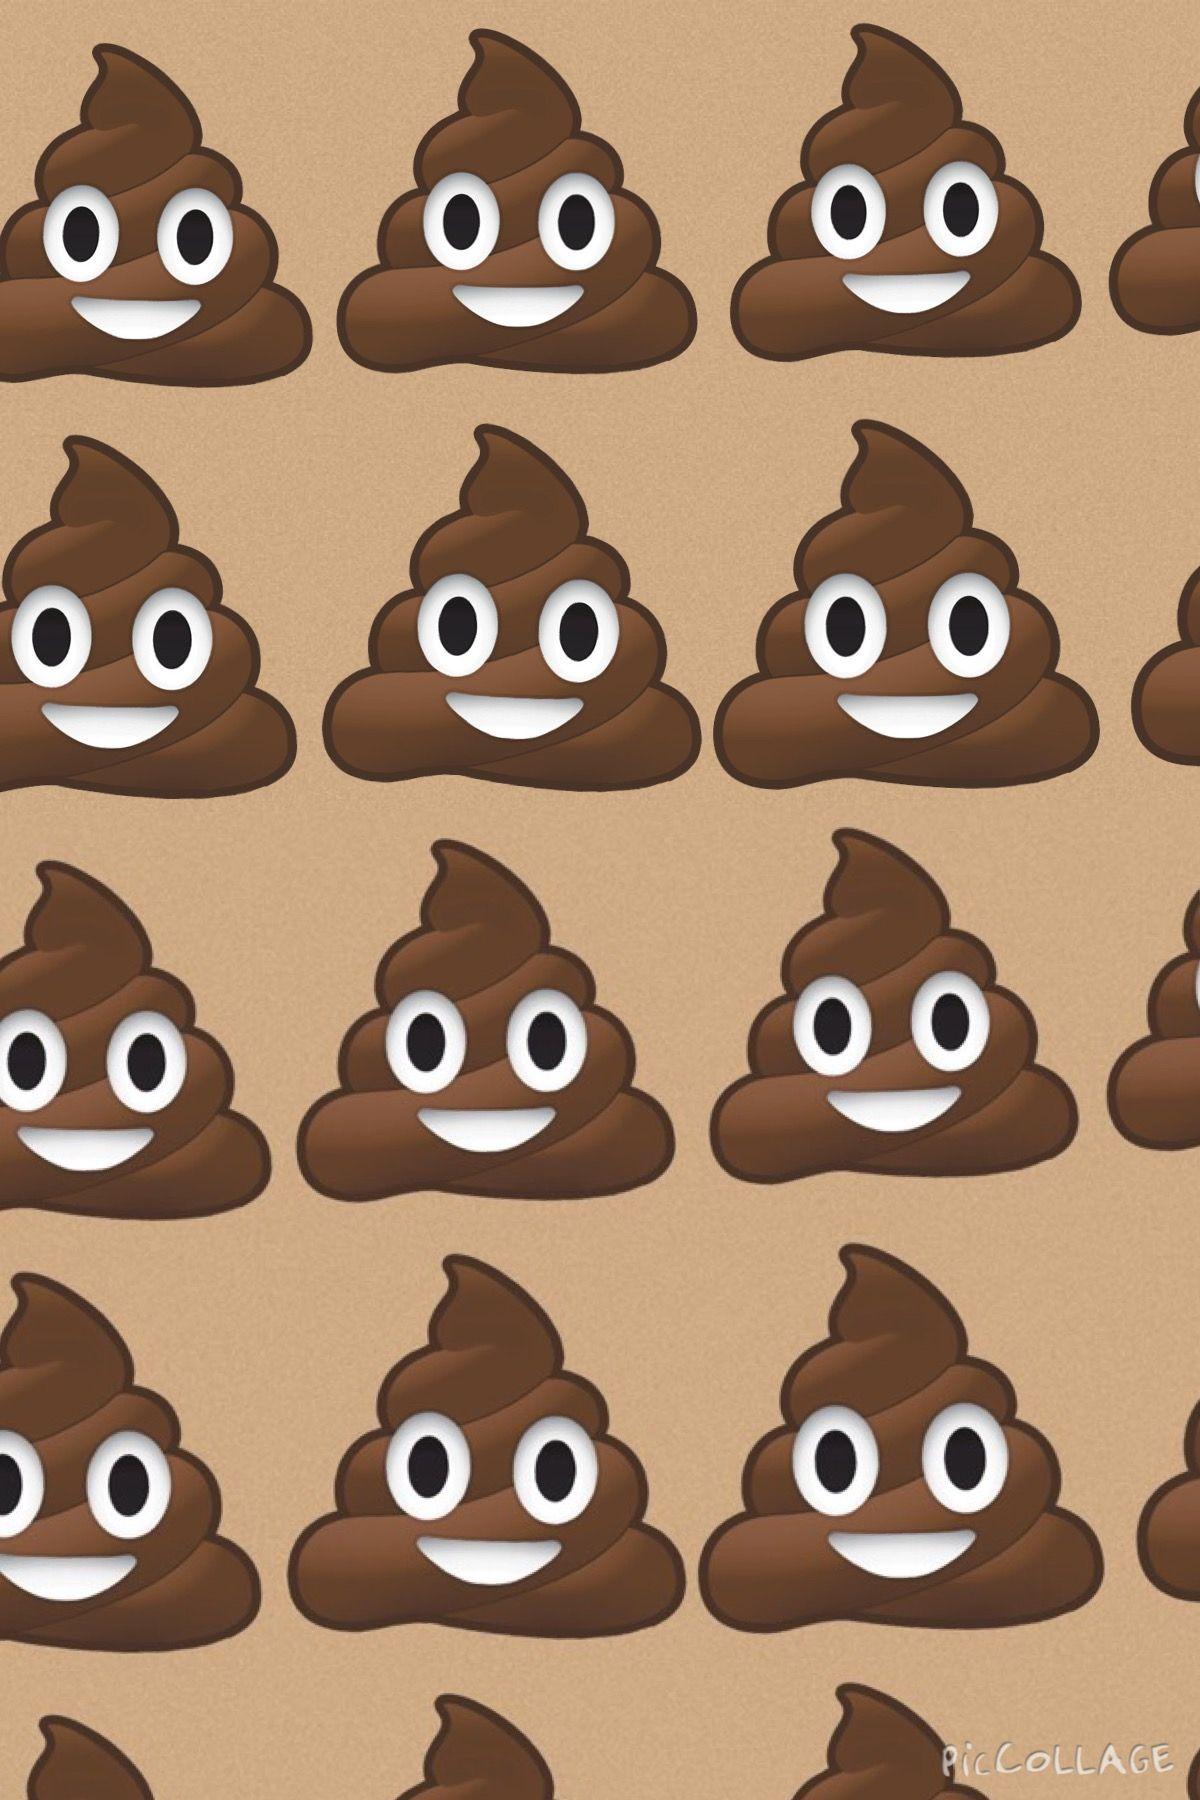  Poop  Emoji  Wallpapers  Wallpaper  Cave